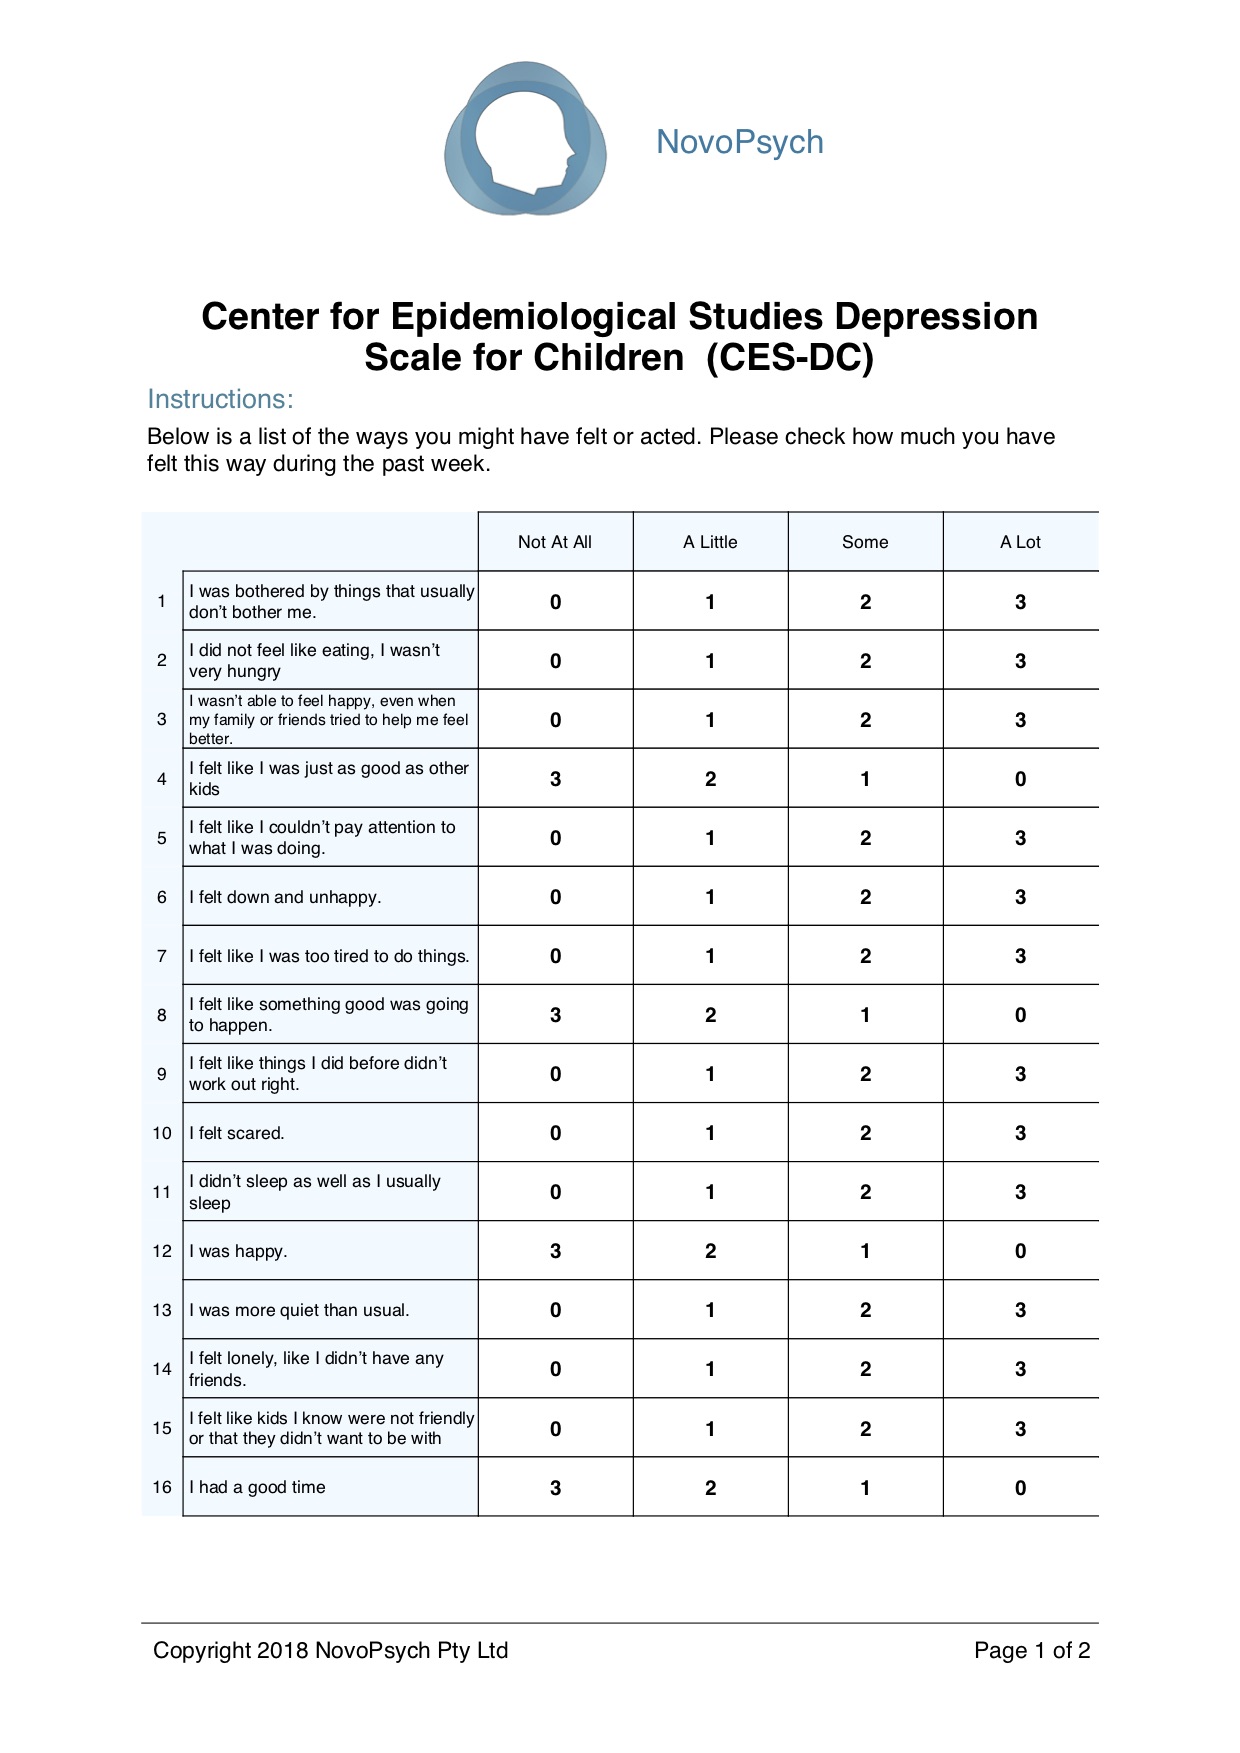 Center for Epidemiological Studies Depression Scale for Children (CESDC) NovoPsych